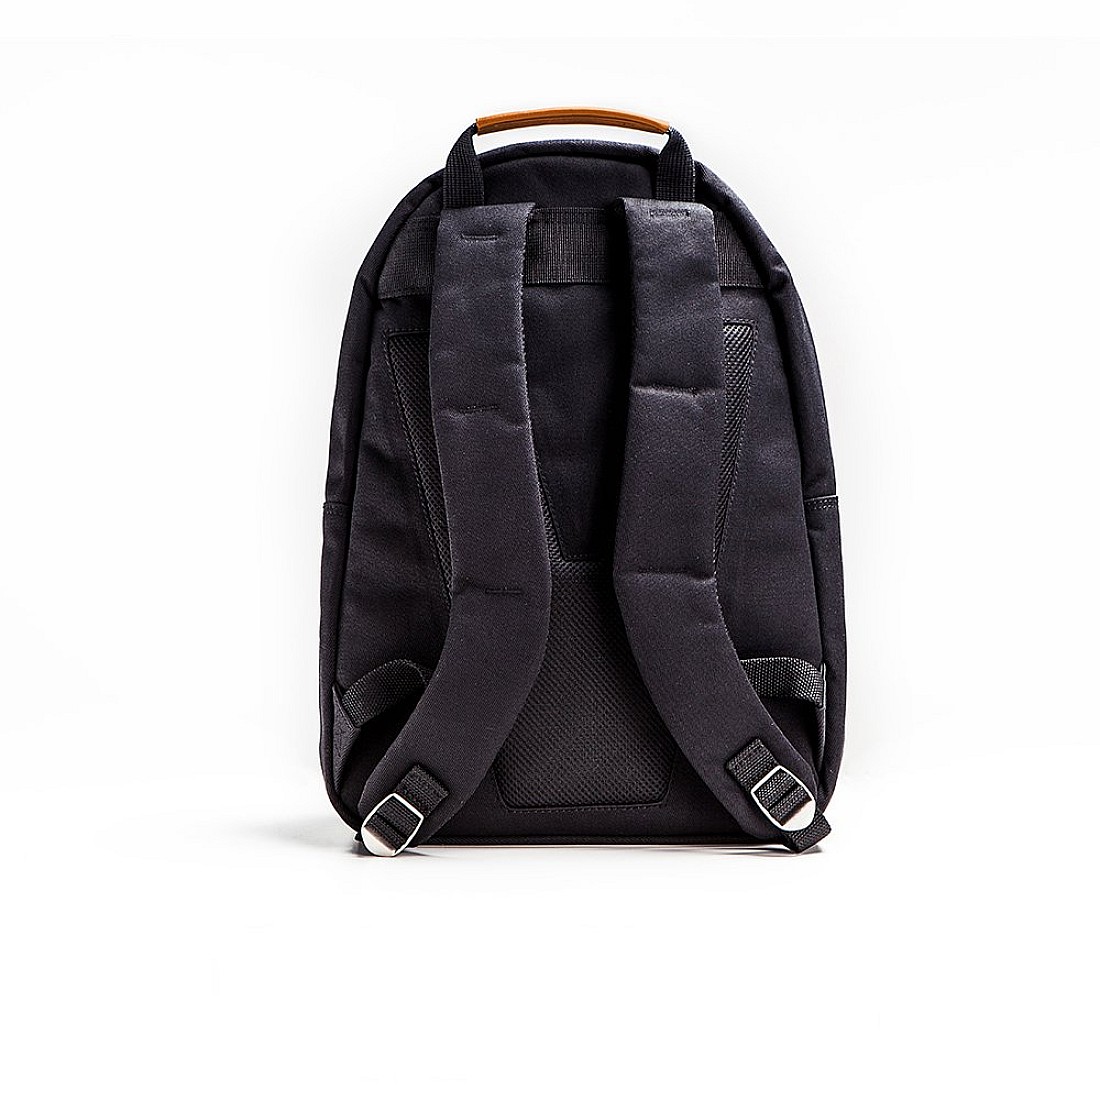 Venque Classic Black Backpack